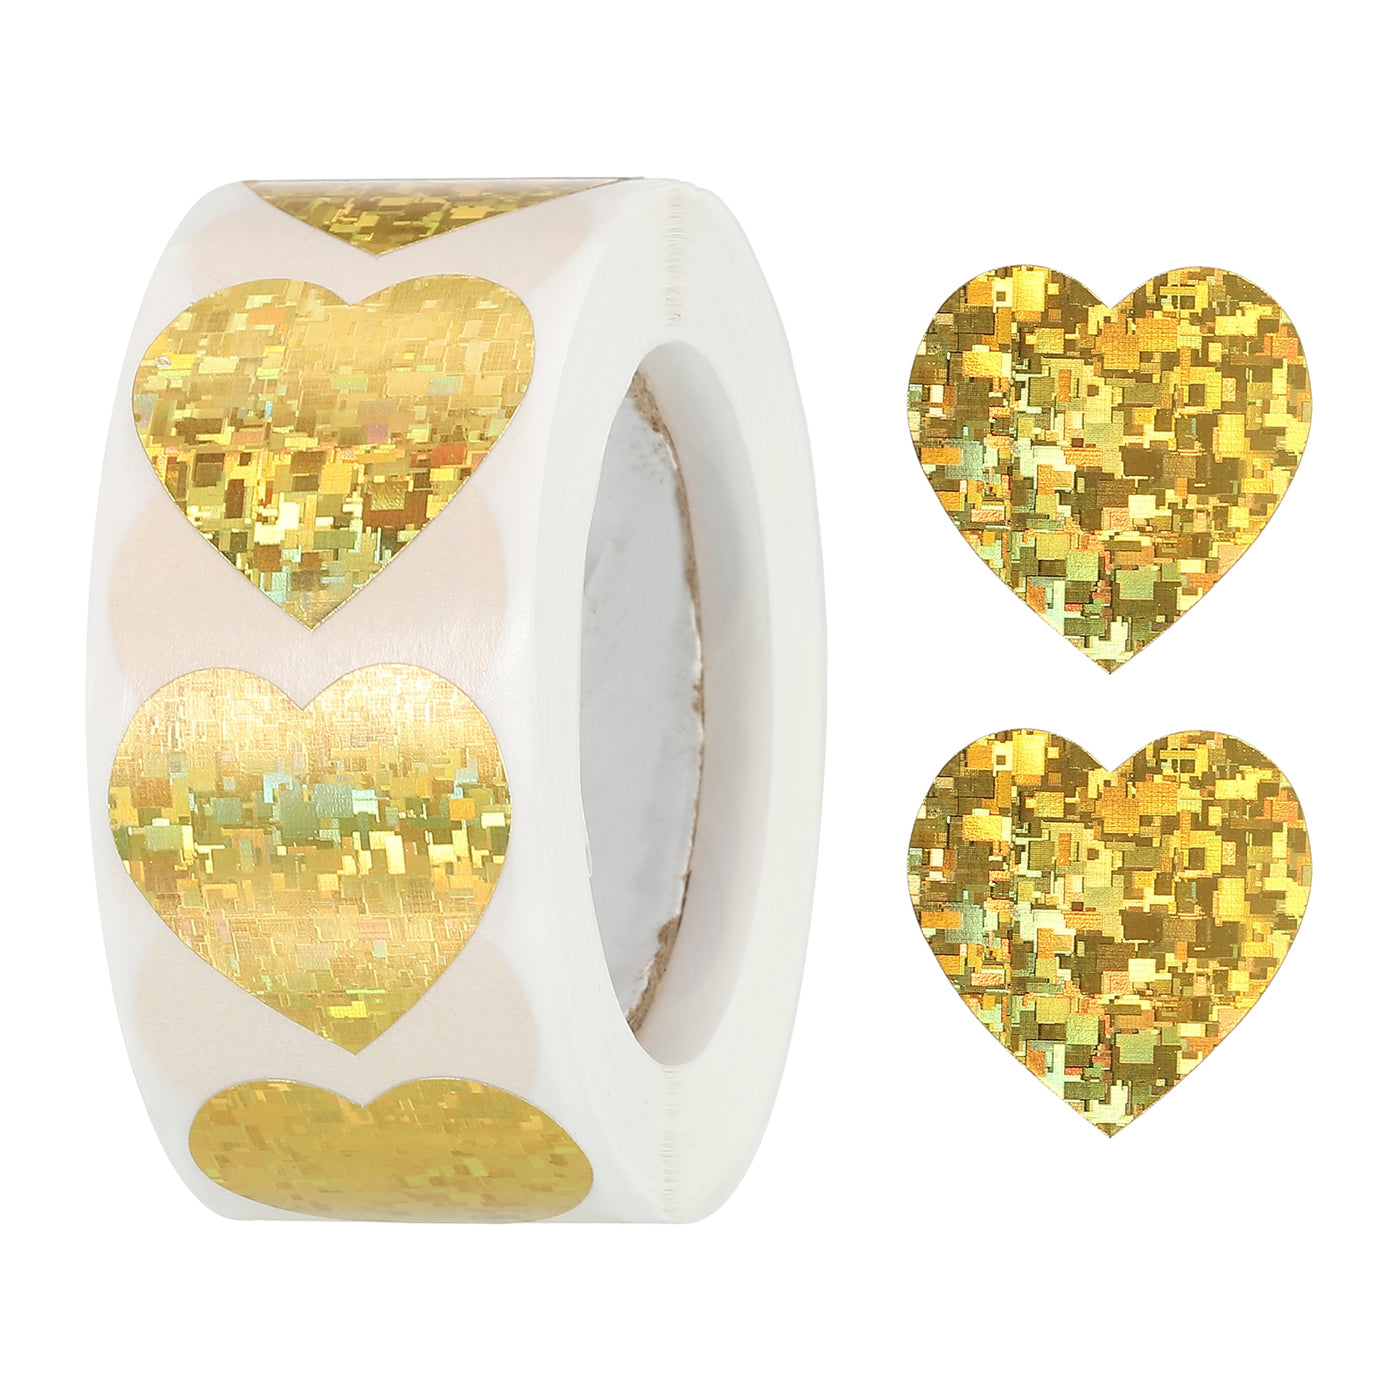 Harfington Heart Shaped Sticker 1" Self-Adhesive Love Label Glitter Golden 500 Pcs